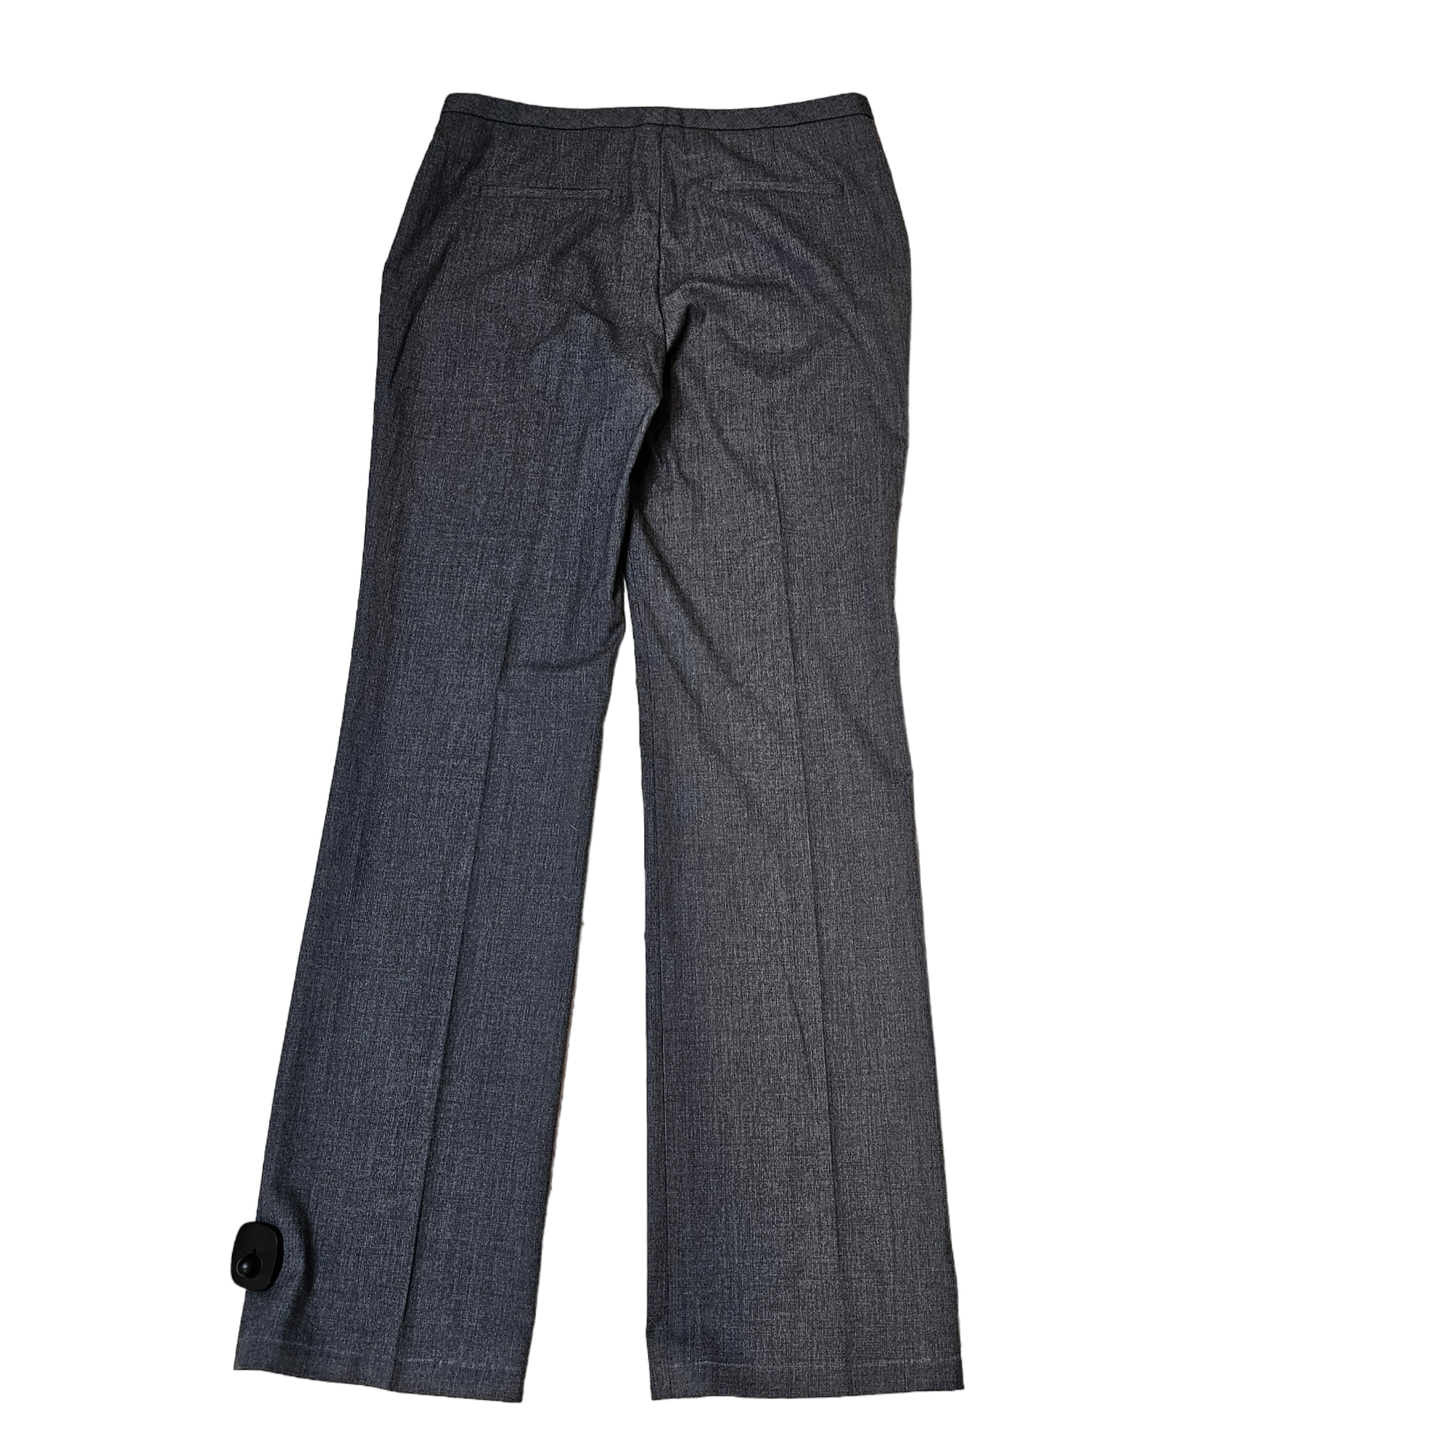 Pants Designer By Elie Tahari  Size: 6